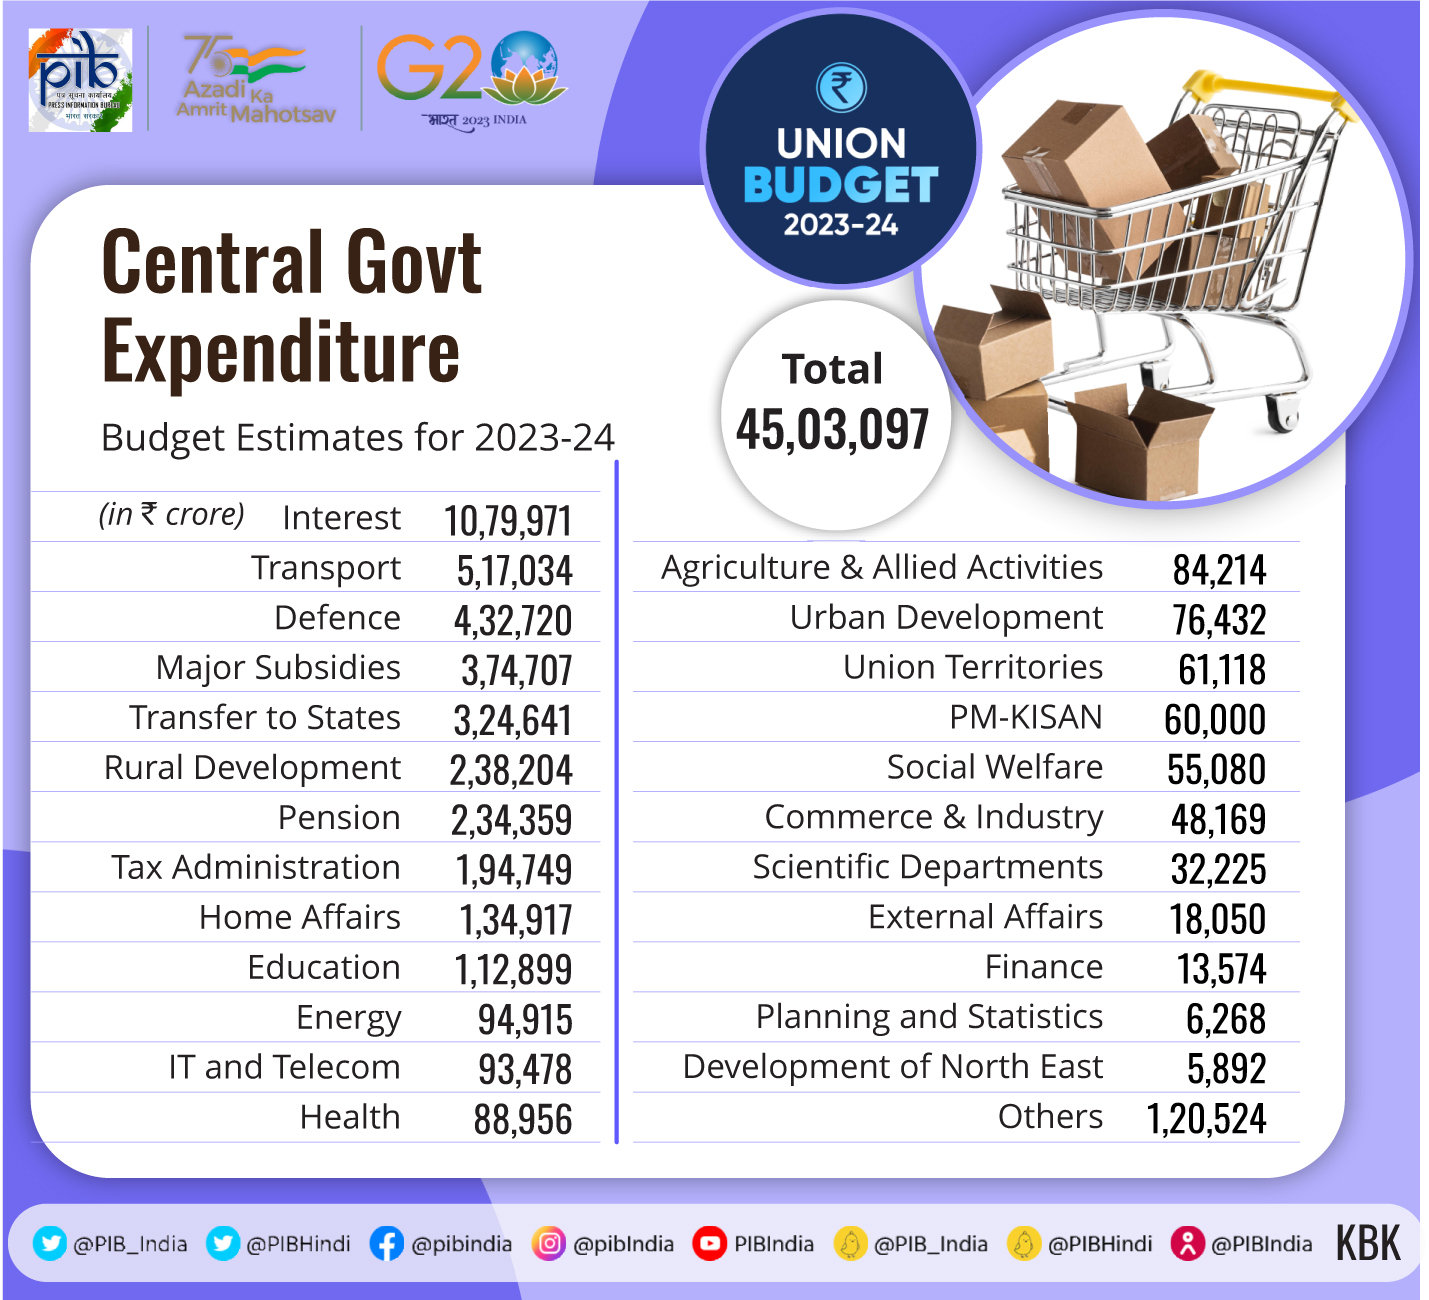 Expenditure Union Budget 2023-24